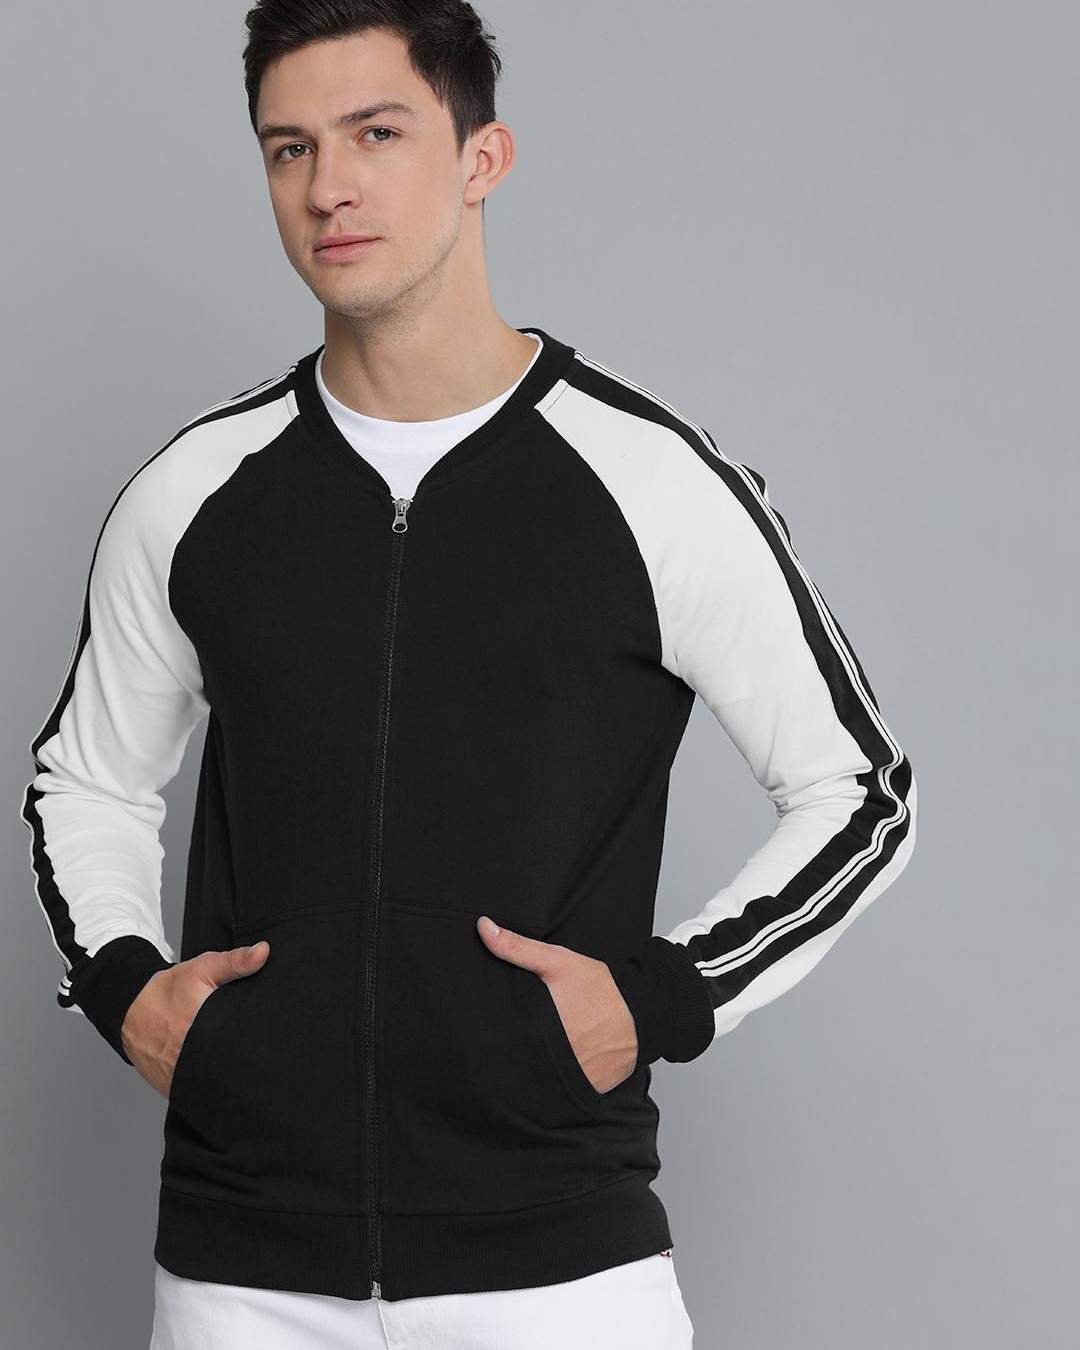 Buy Men's Black & White Color Block Jacket for Men Black Online at Bewakoof